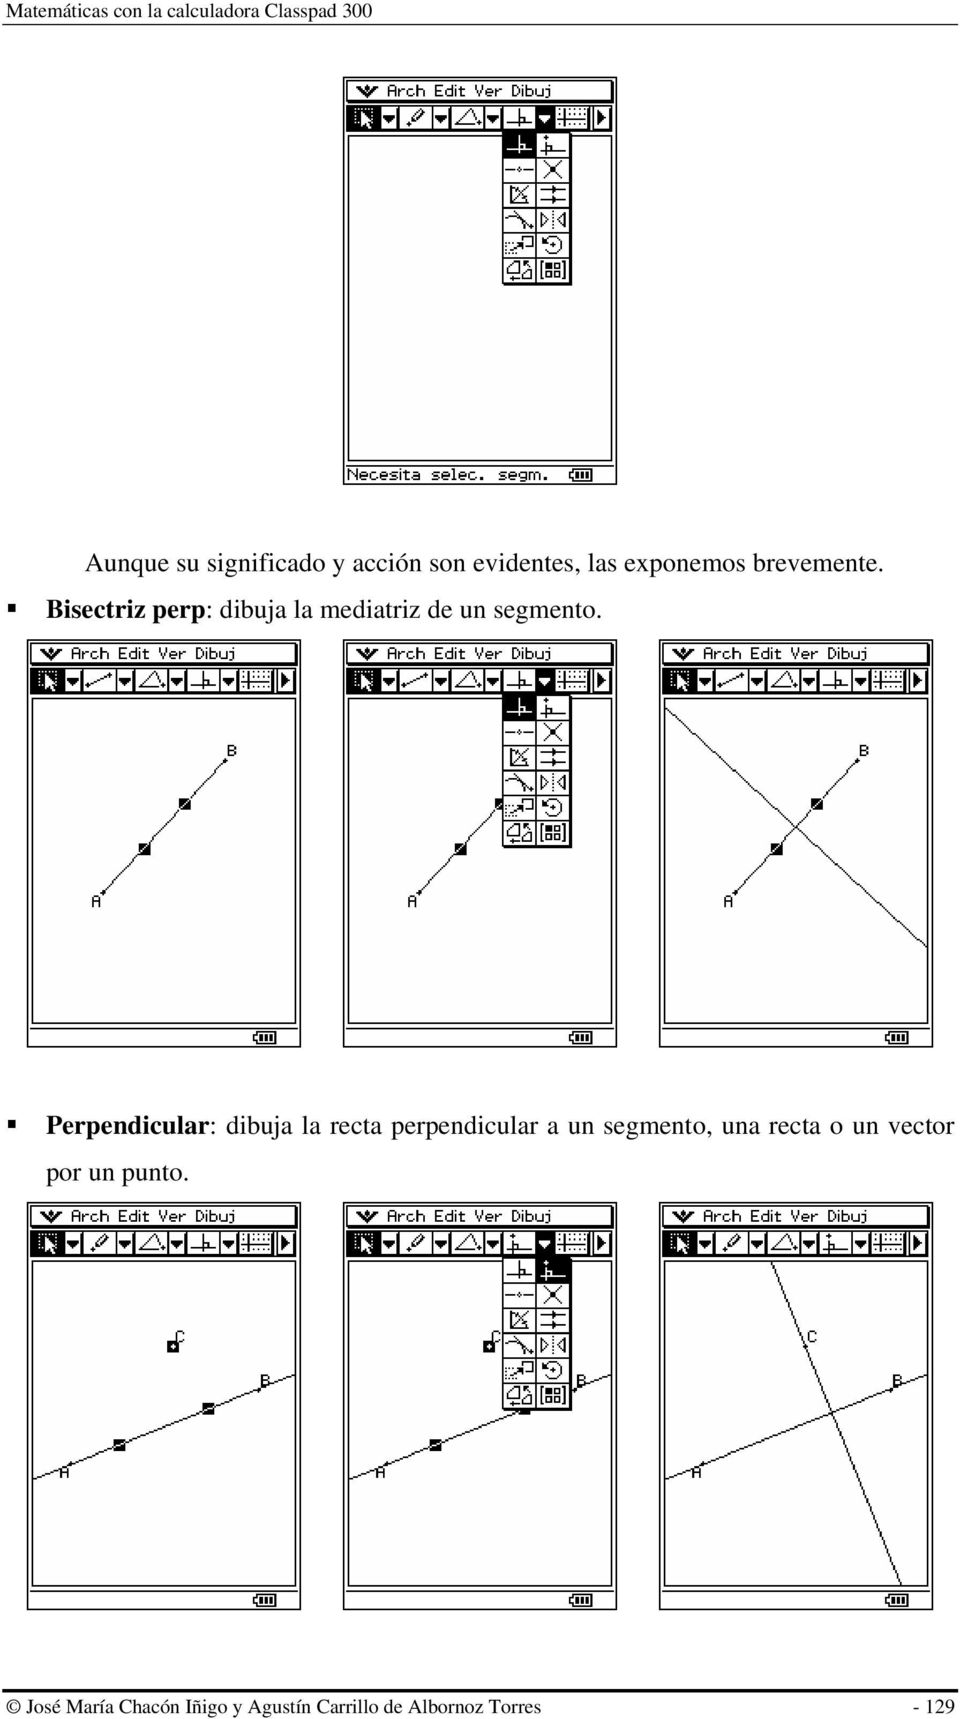 Perpendicular: dibuja la recta perpendicular a un segmento, una recta o